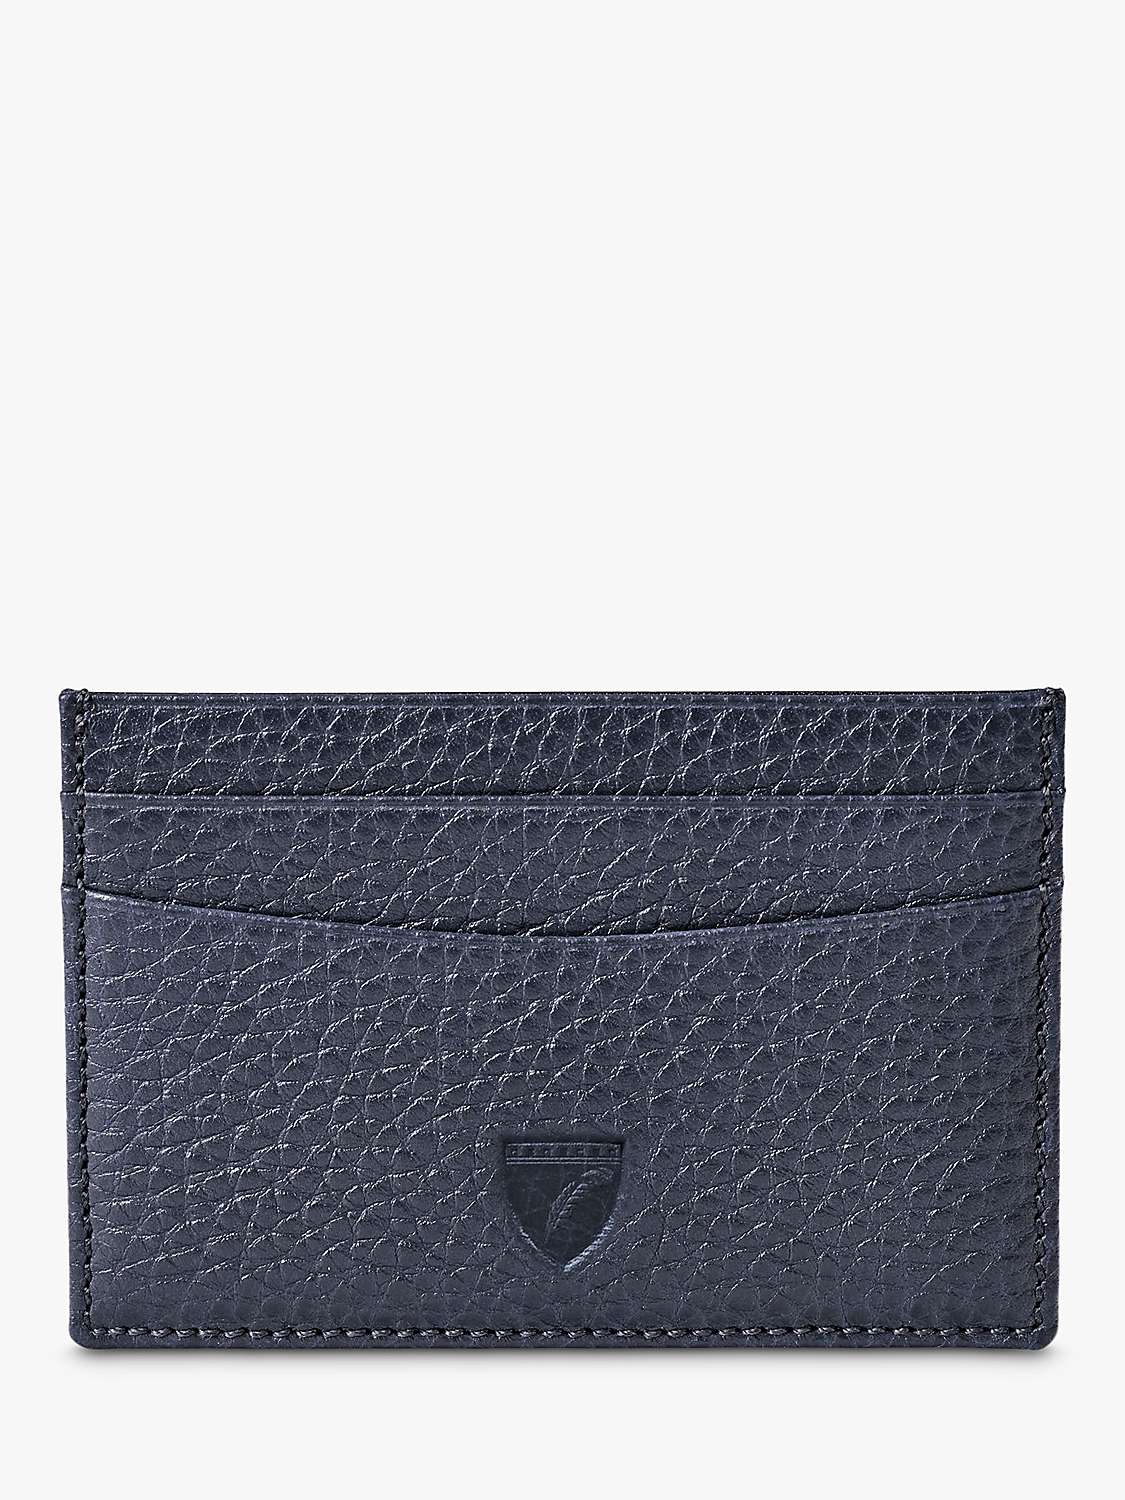 Buy Aspinal of London Pebble Leather Slim Credit Card Case Online at johnlewis.com